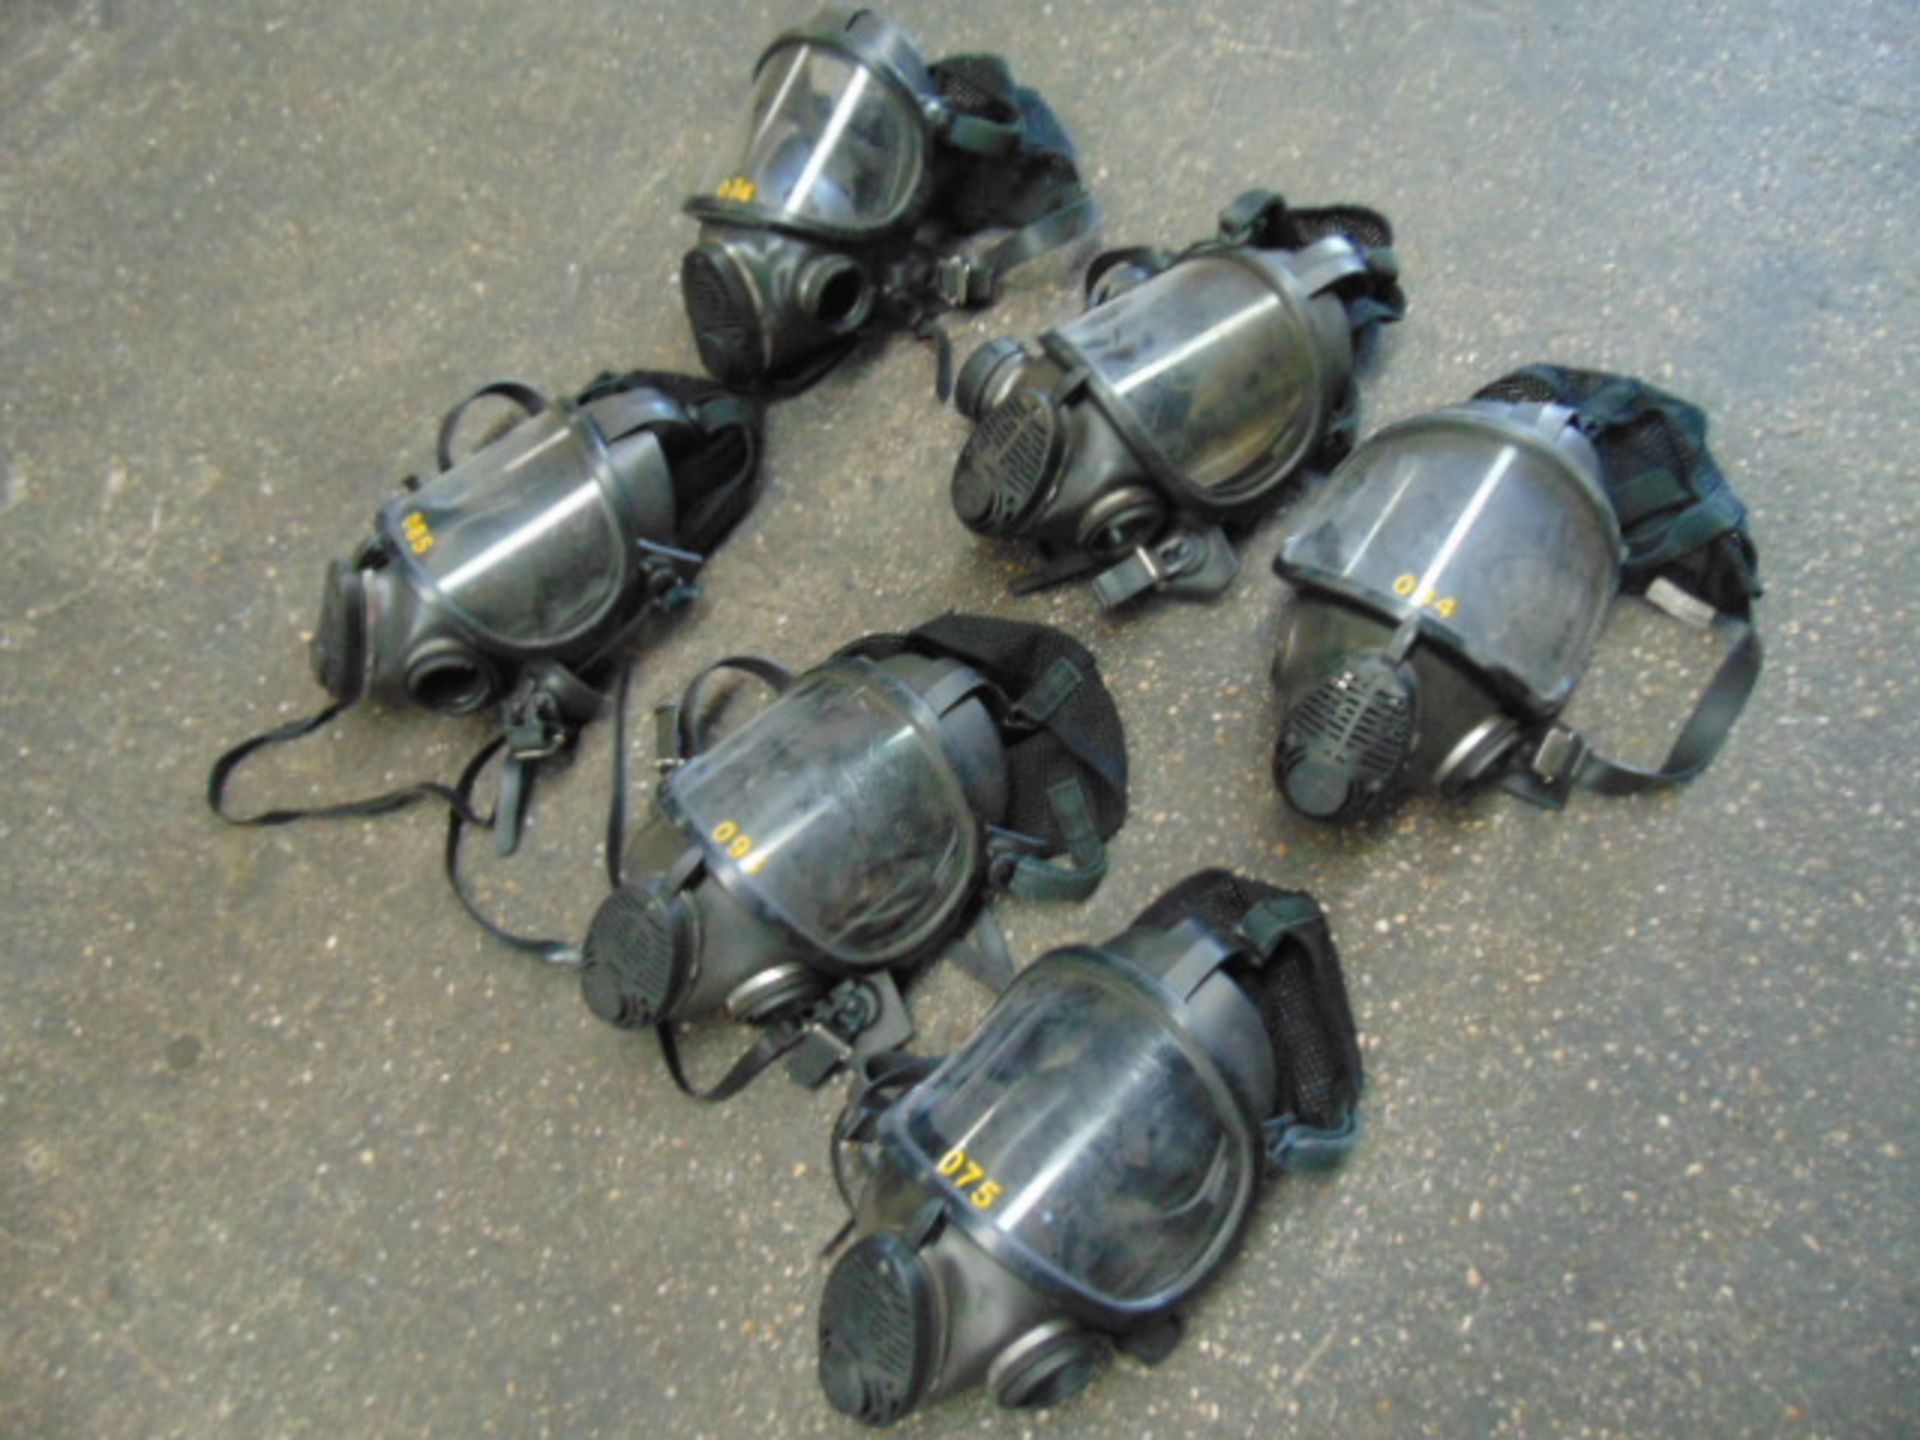 6 x Breathing Apparatus Masks - Image 2 of 4